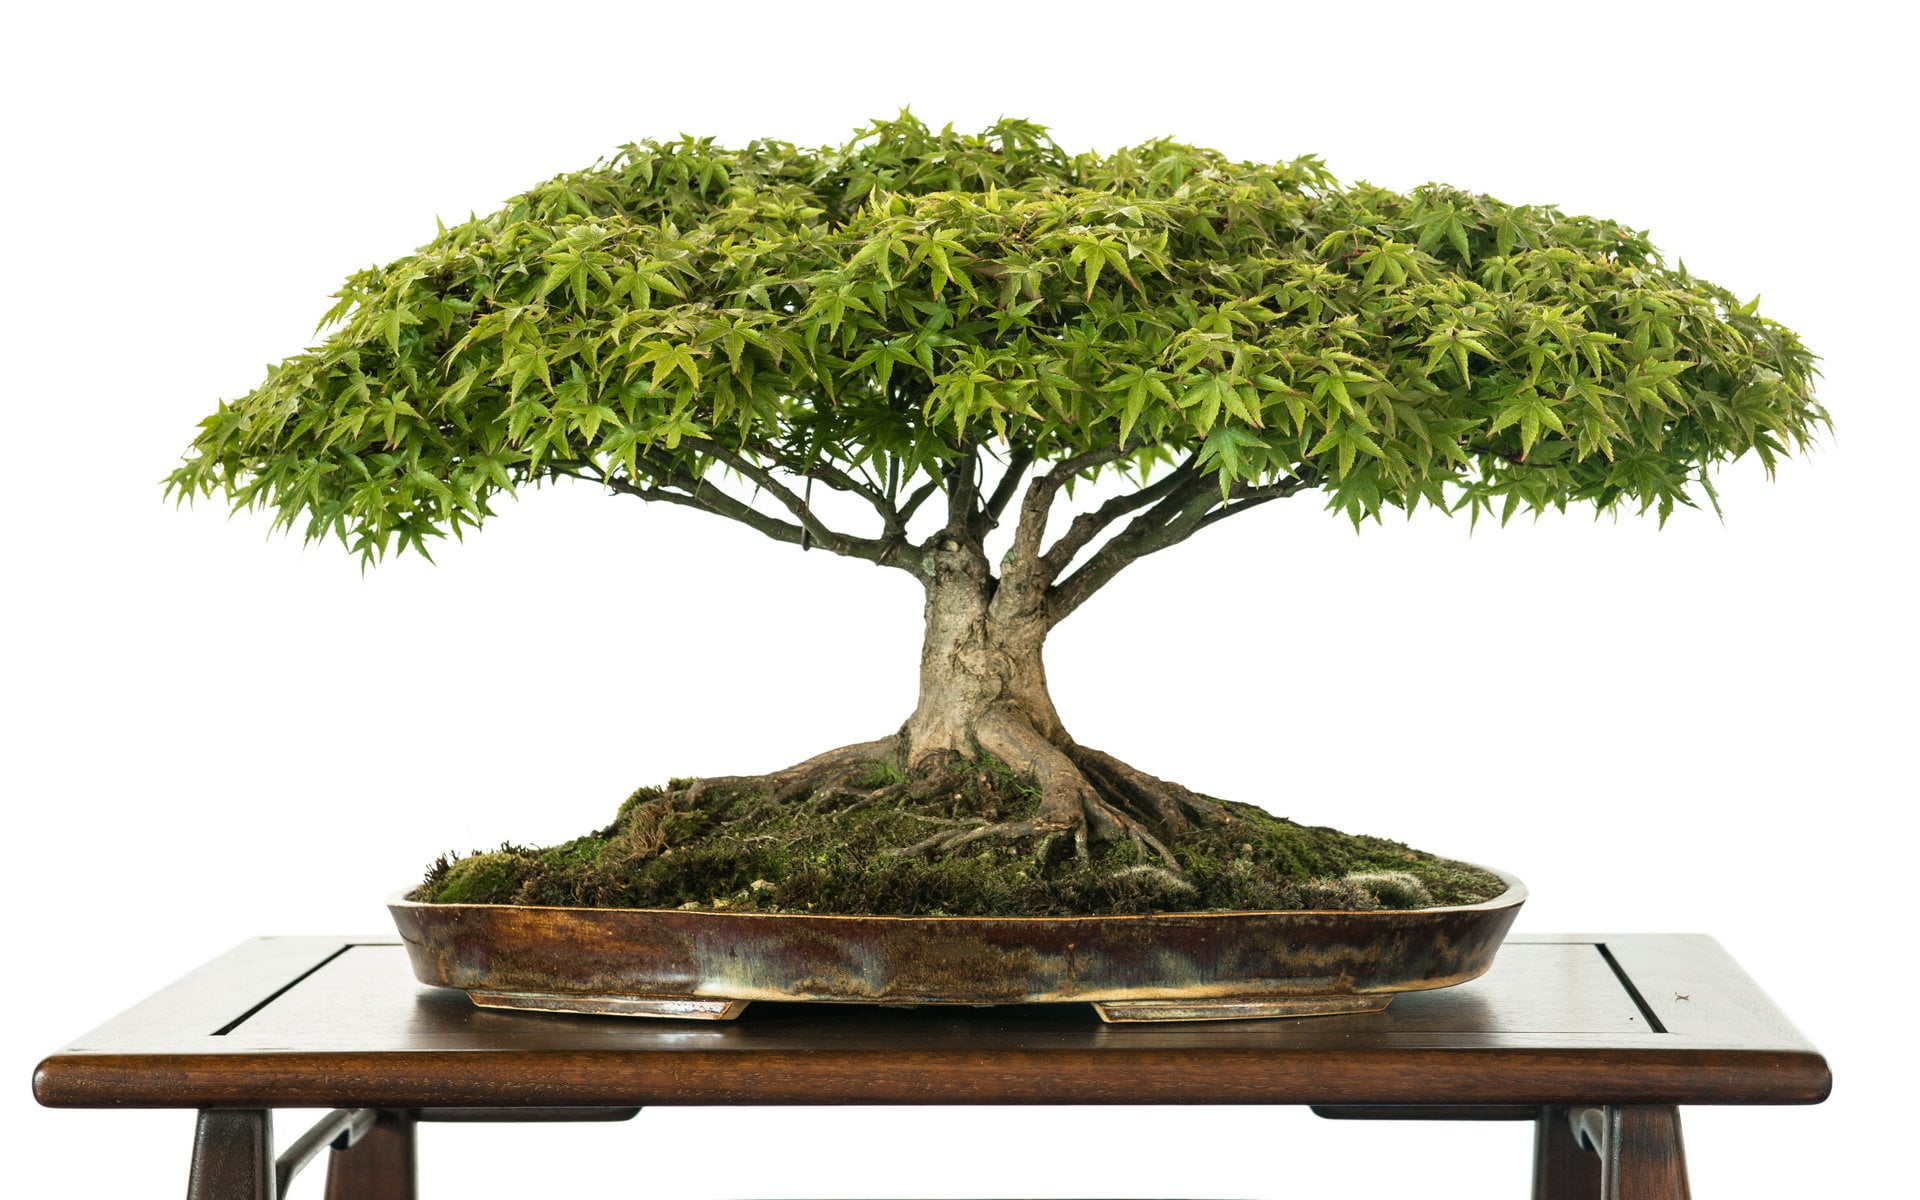 Earth, Bonsai, bonsai tree, plant, growth, no people, green color